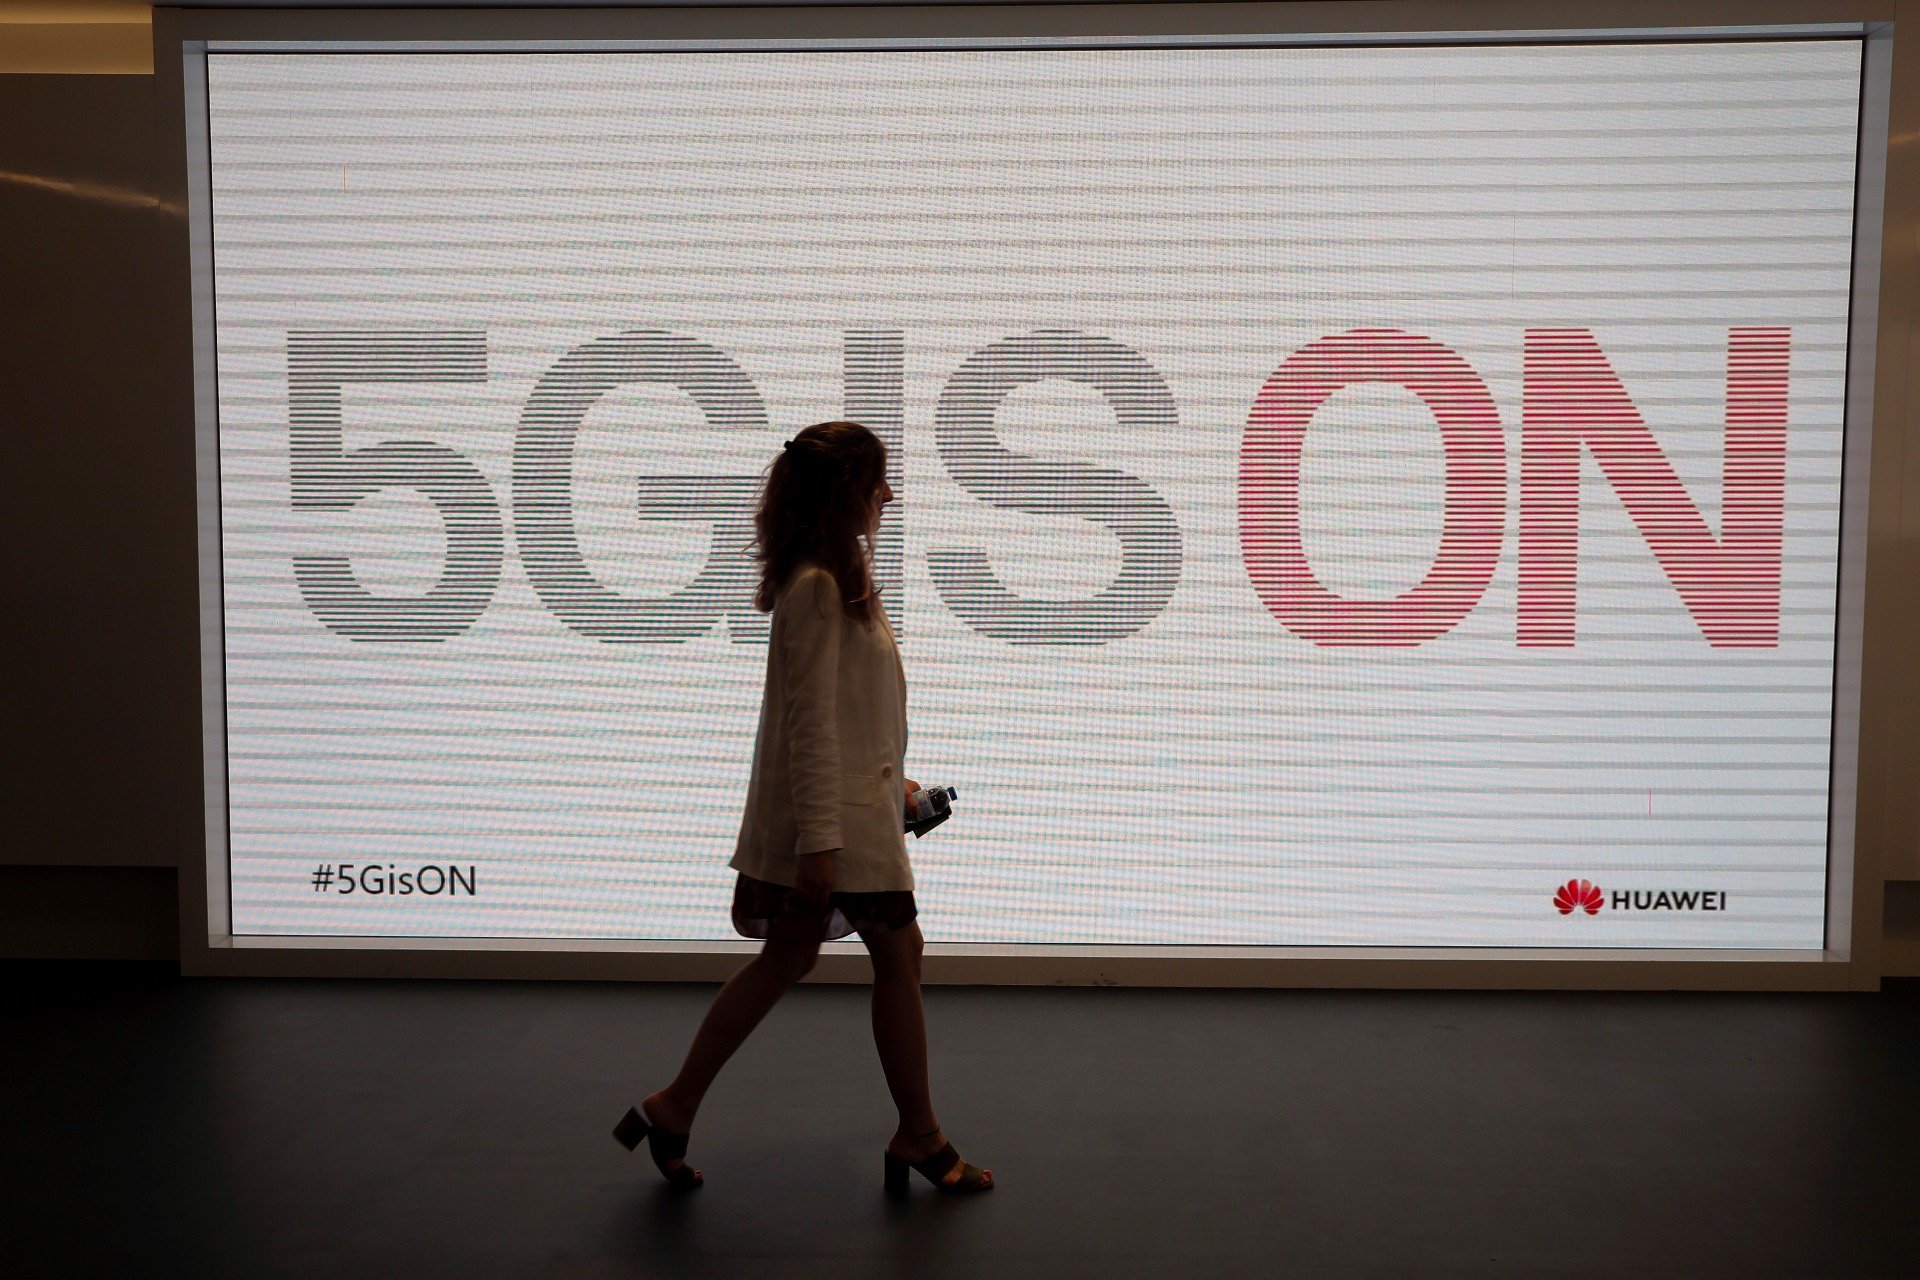 Foto del evento de Huawei en Madrid "5G IS ON" en 2019. EFE/Archivo/Emilio Naranjo